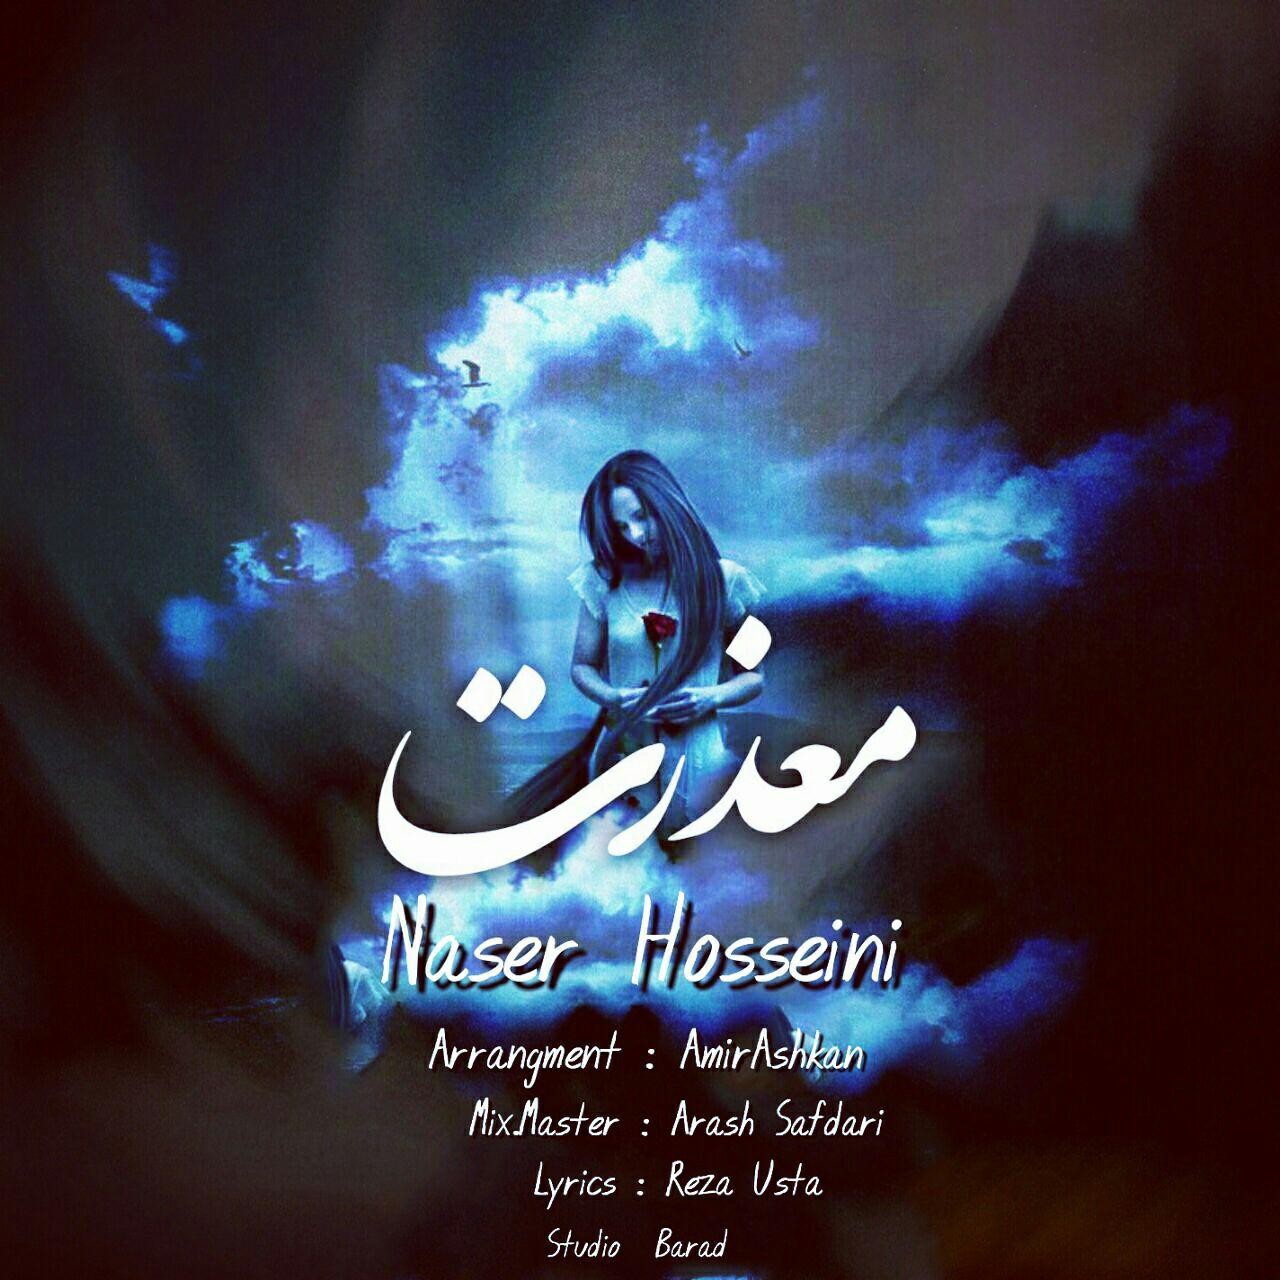 Naser Hosseini – Mazerat